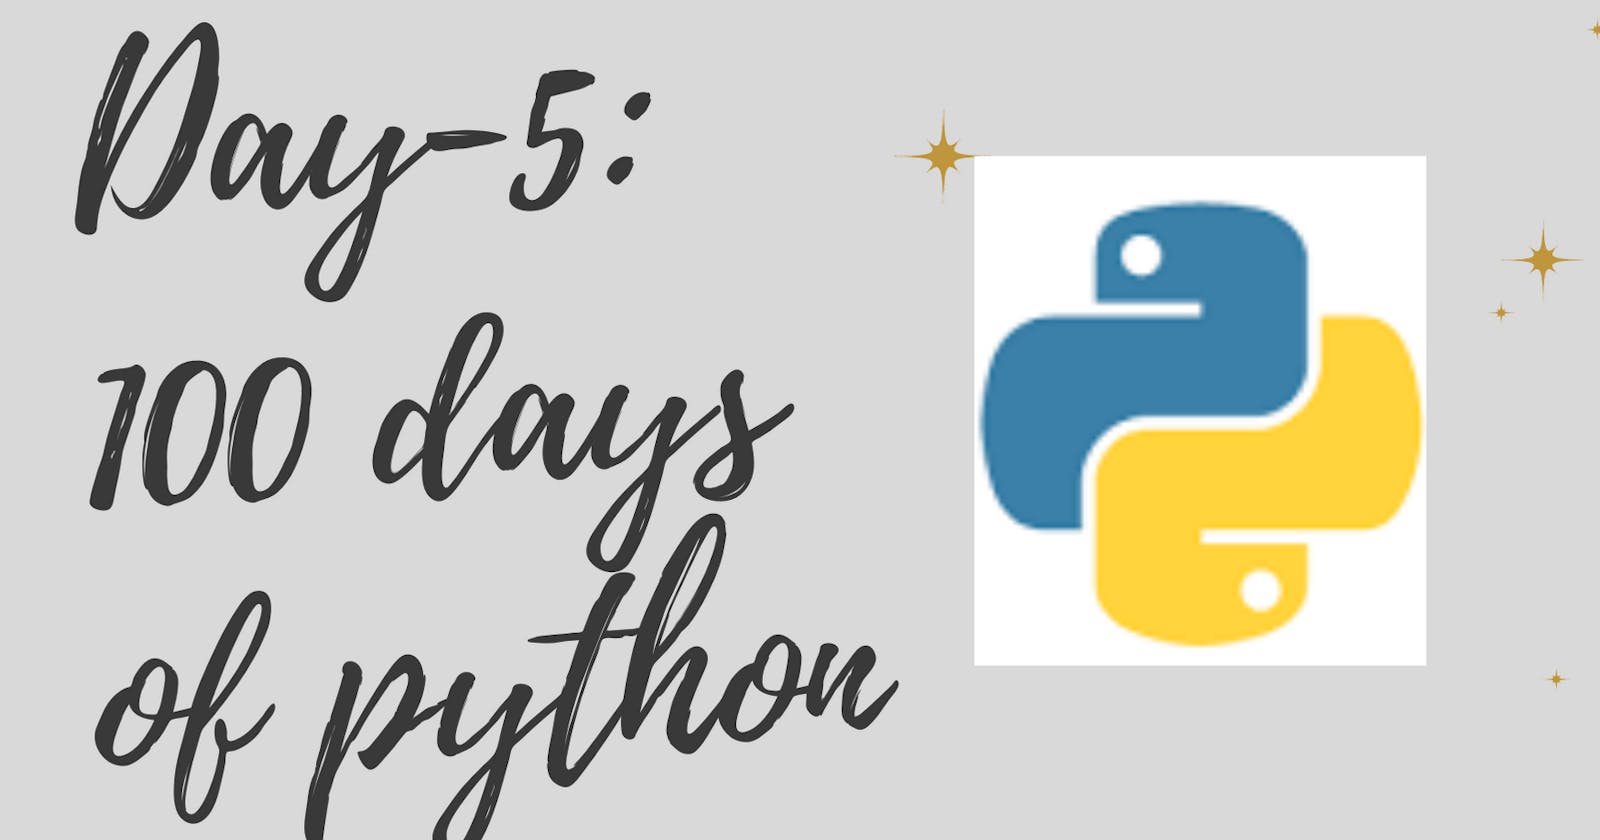 #100 days of Python, Day 5